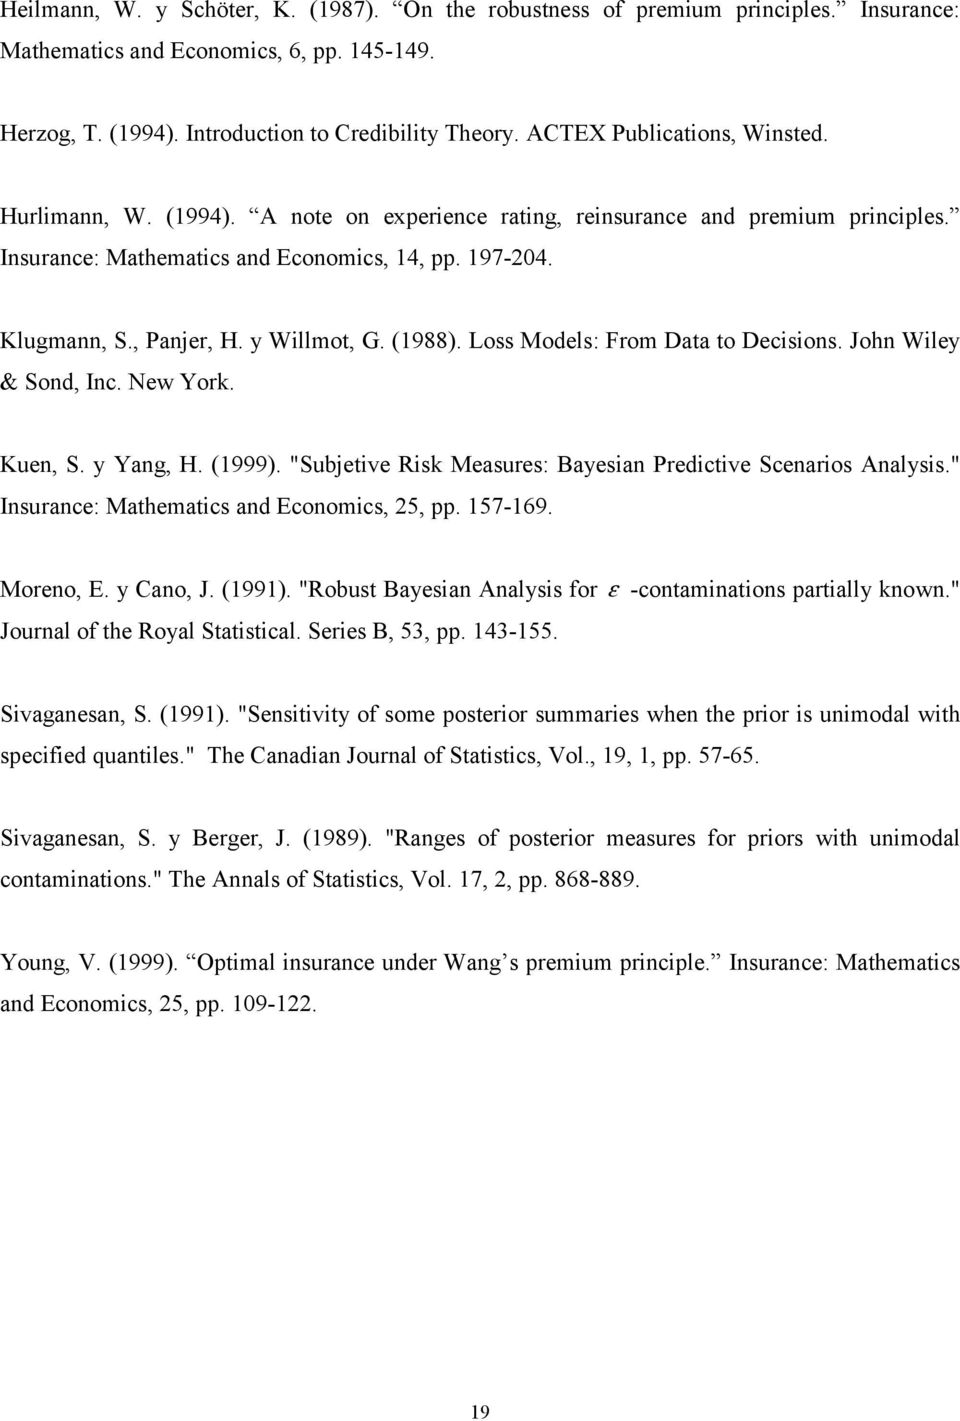 Loss Models: From Daa o Decisions. John Wiley & Sond Inc. New York. Kuen S. y Yang H. (999). "Subjeive isk Measures: Bayesian Predicive Scenarios Analysis." Insurance: Mahemaics and Economics 5 pp.